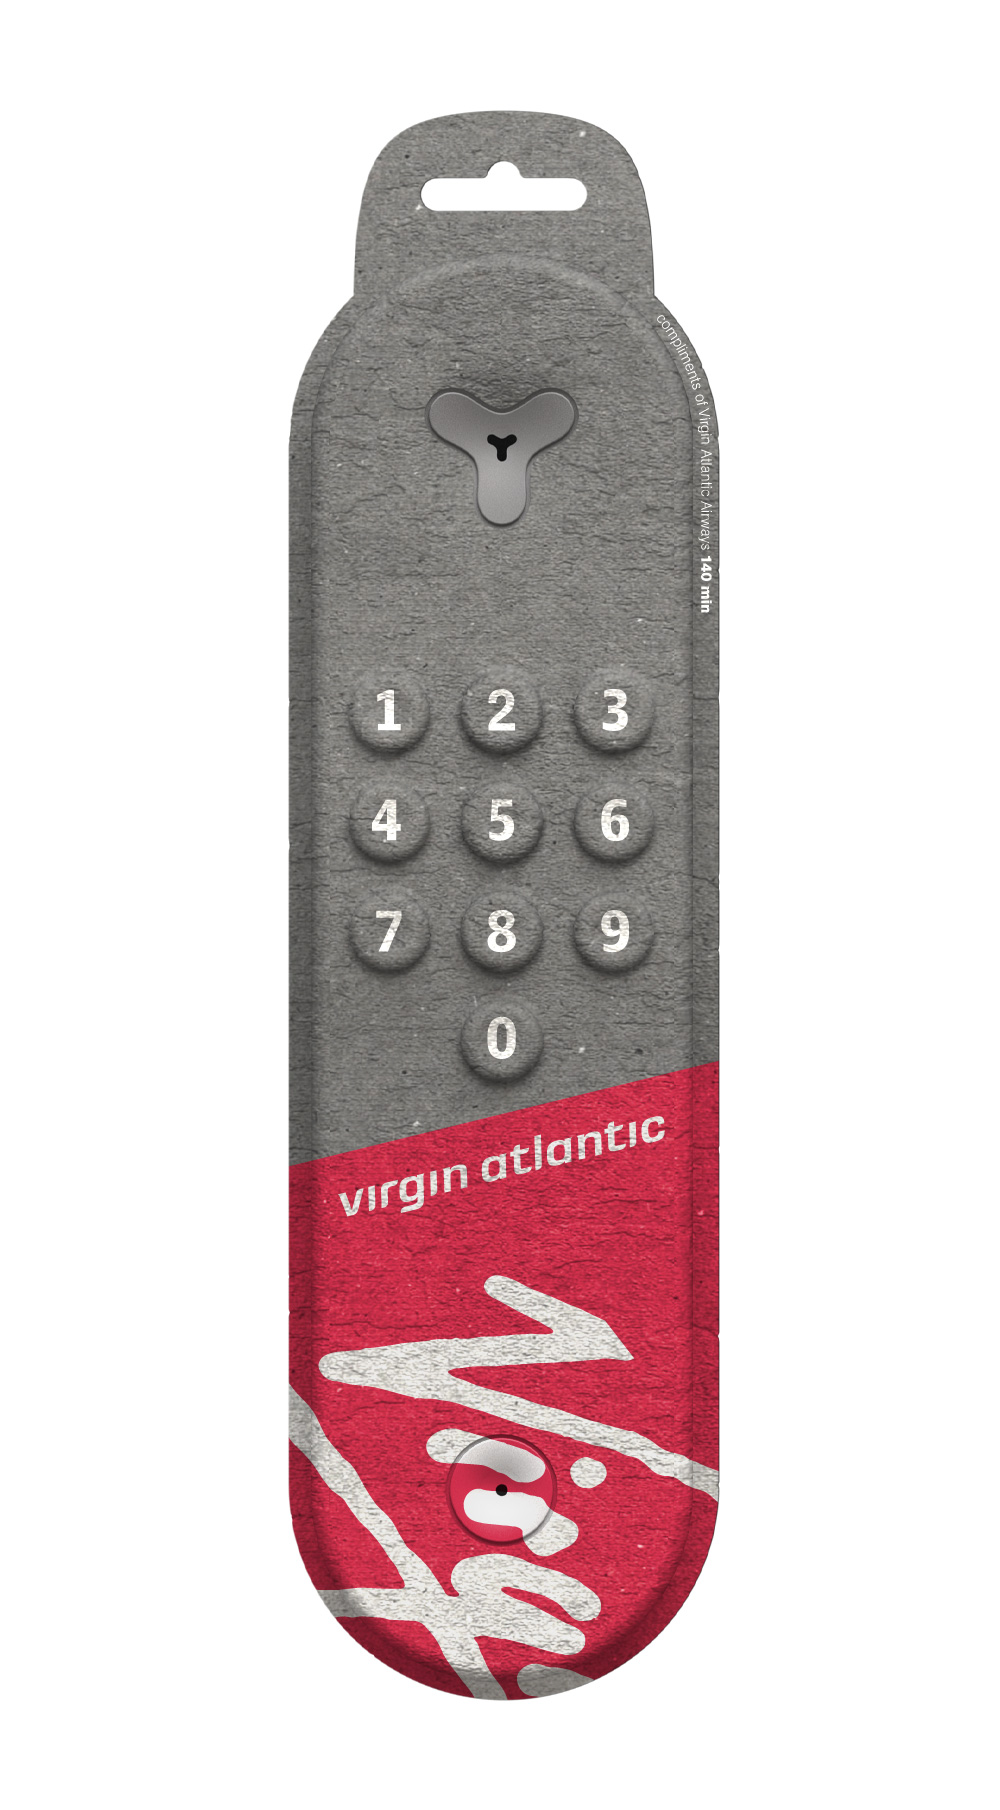 Pulp Phone | Front View | Virgin Atlantic